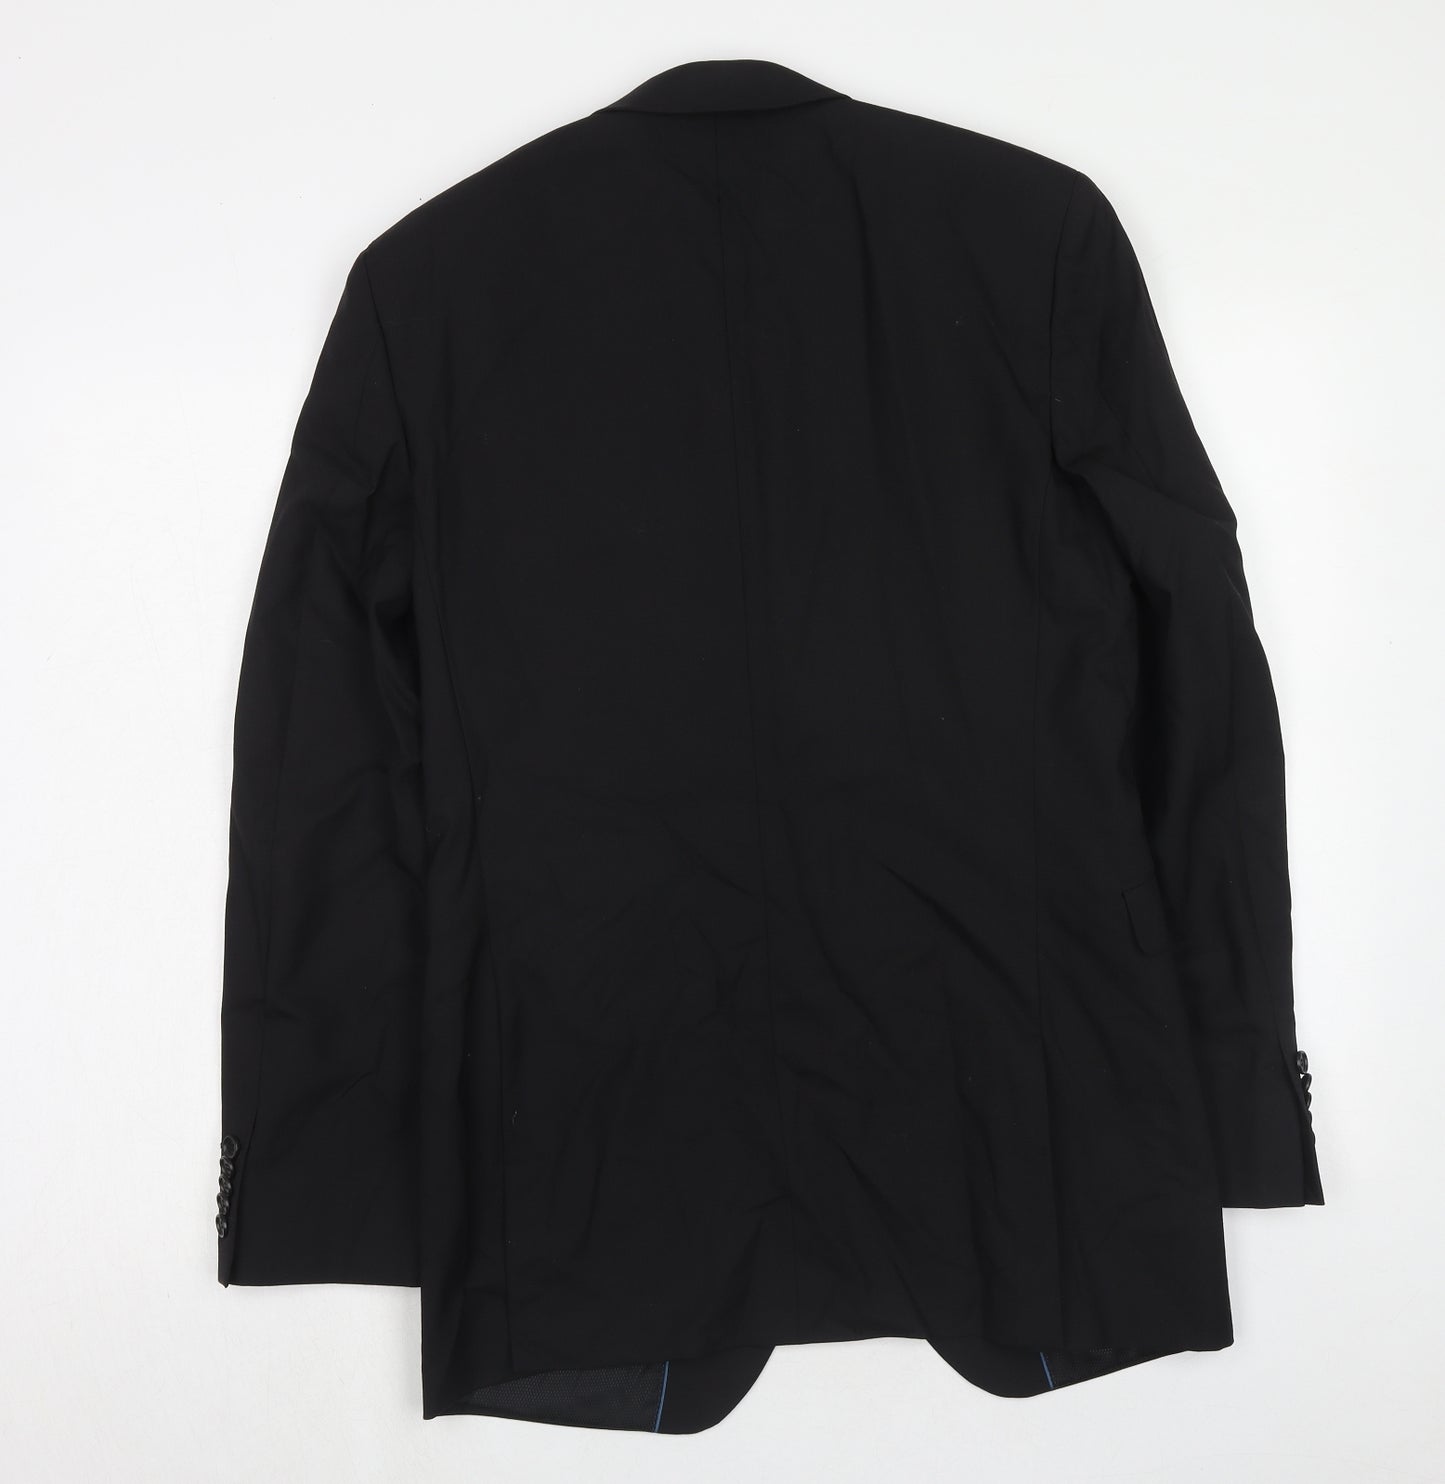 Burton Mens Black Wool Jacket Suit Jacket Size 38 Regular